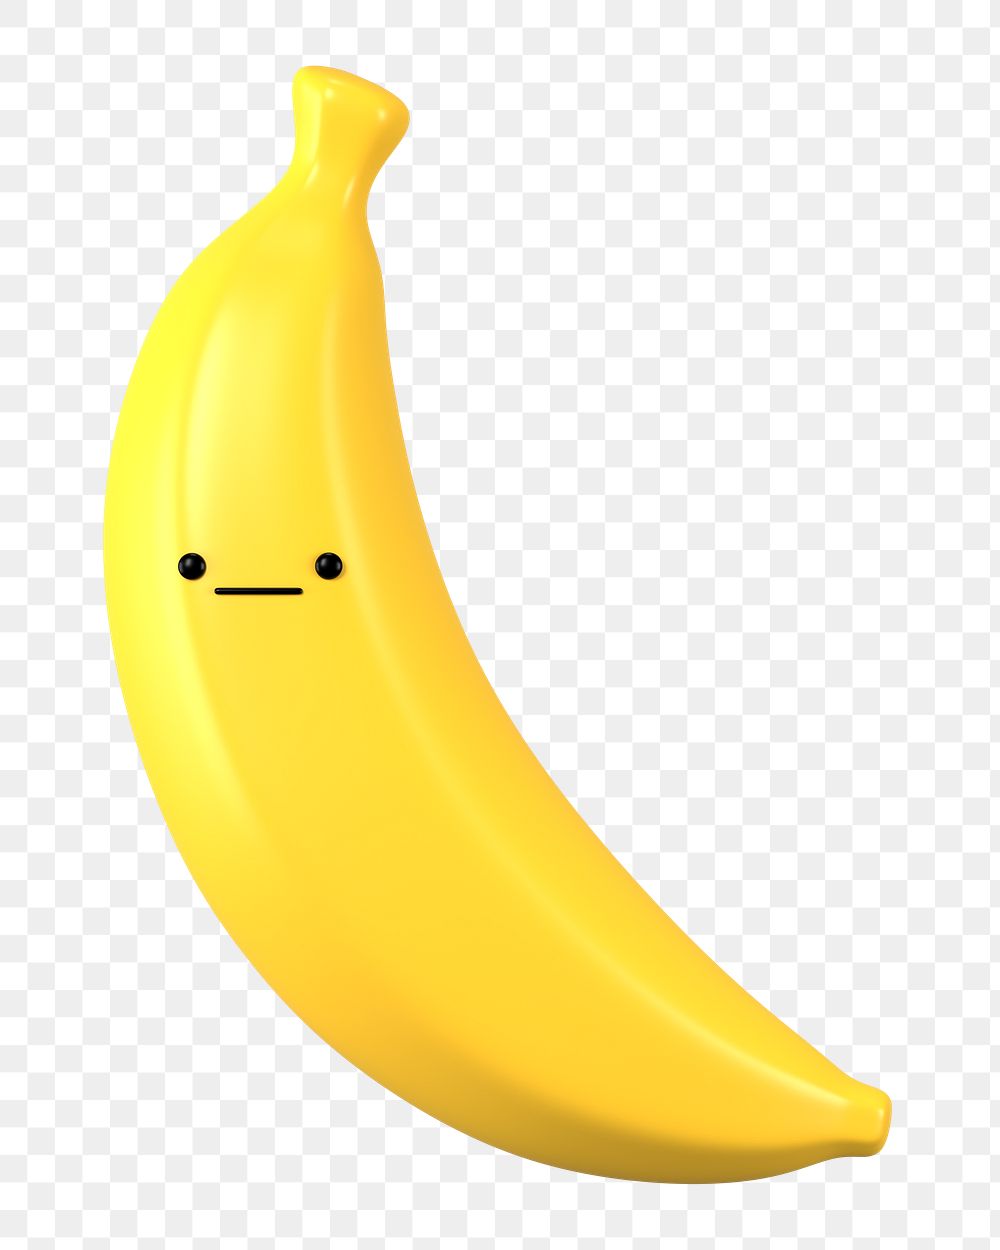 3D banana png neutral face emoticon, transparent background